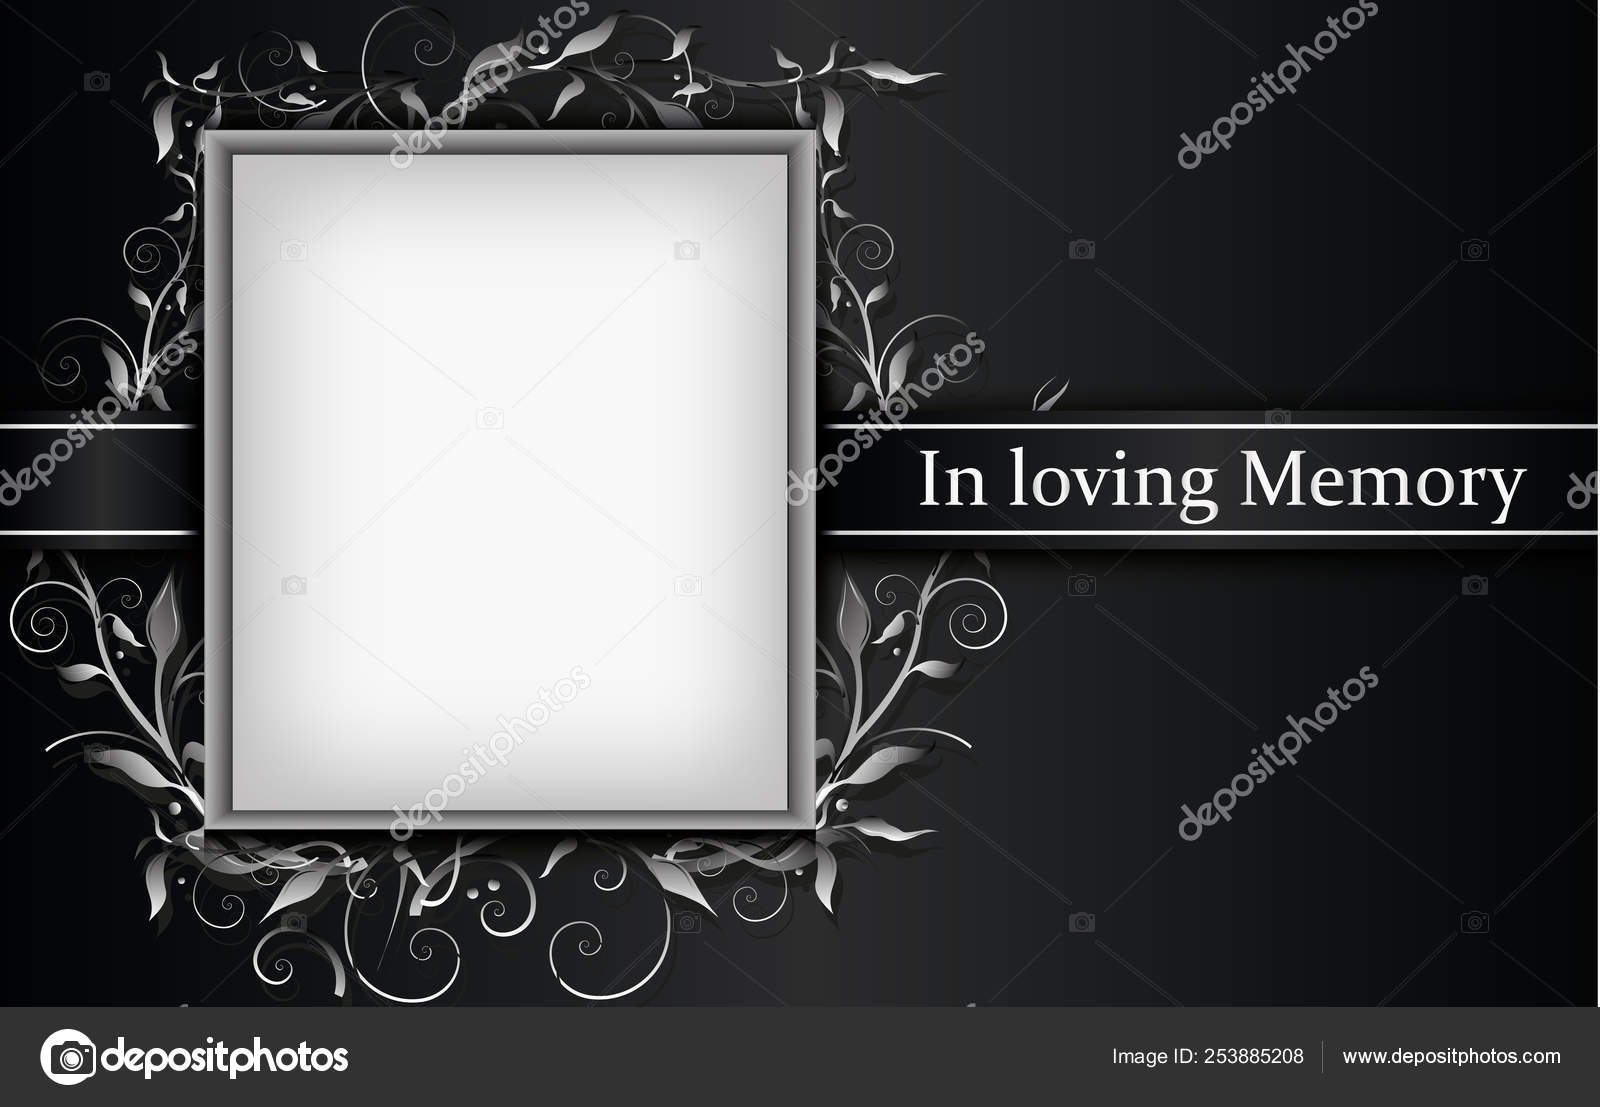 https://st4.depositphotos.com/24038376/25388/v/1600/depositphotos_253885208-stock-illustration-mourning-card-photo-frame-floral.jpg